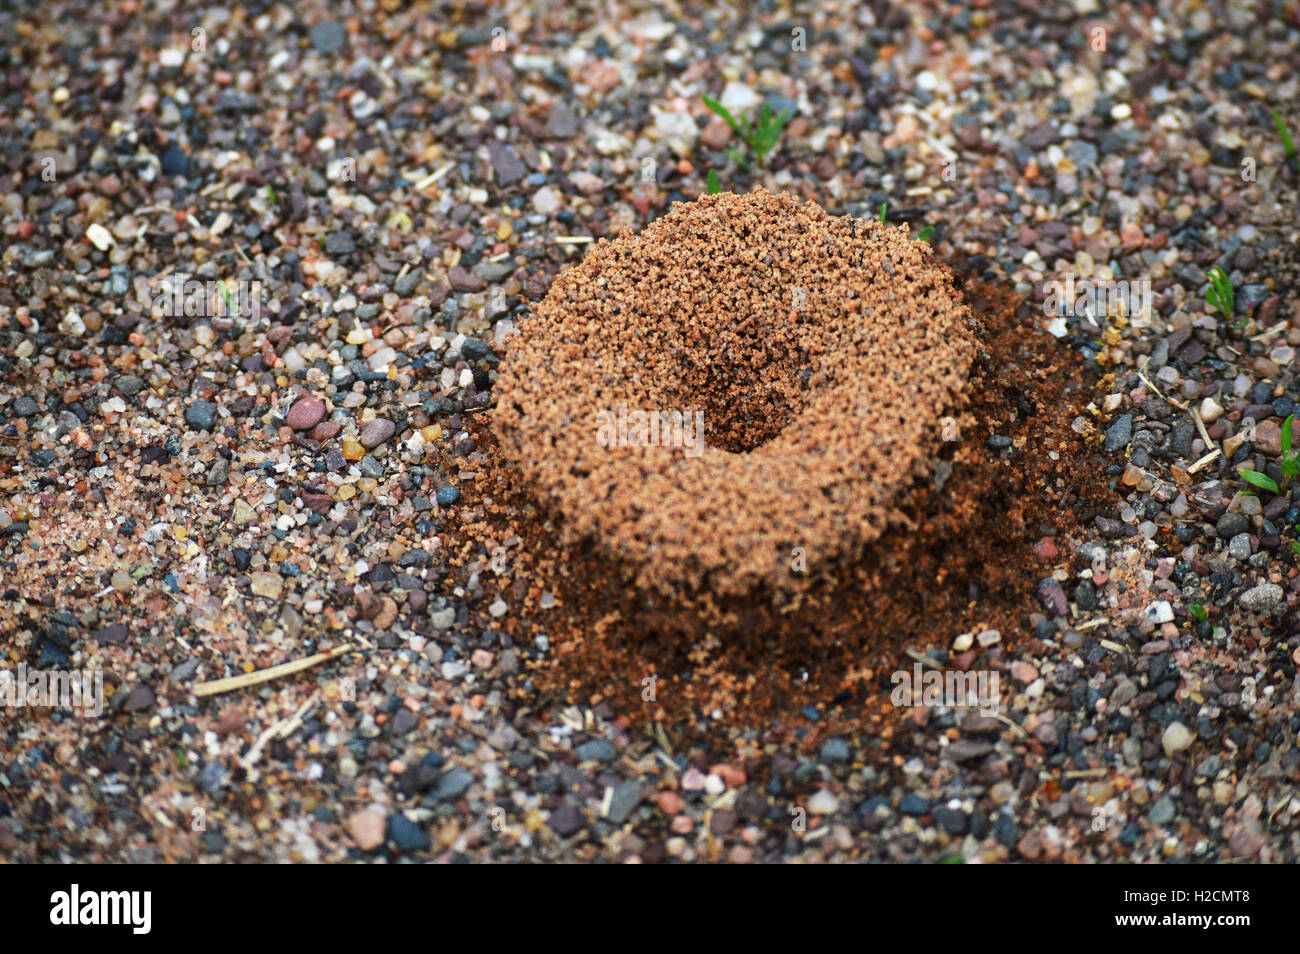 Eine Nahaufnahme Ameisenhaufen Stockfotografie - Alamy